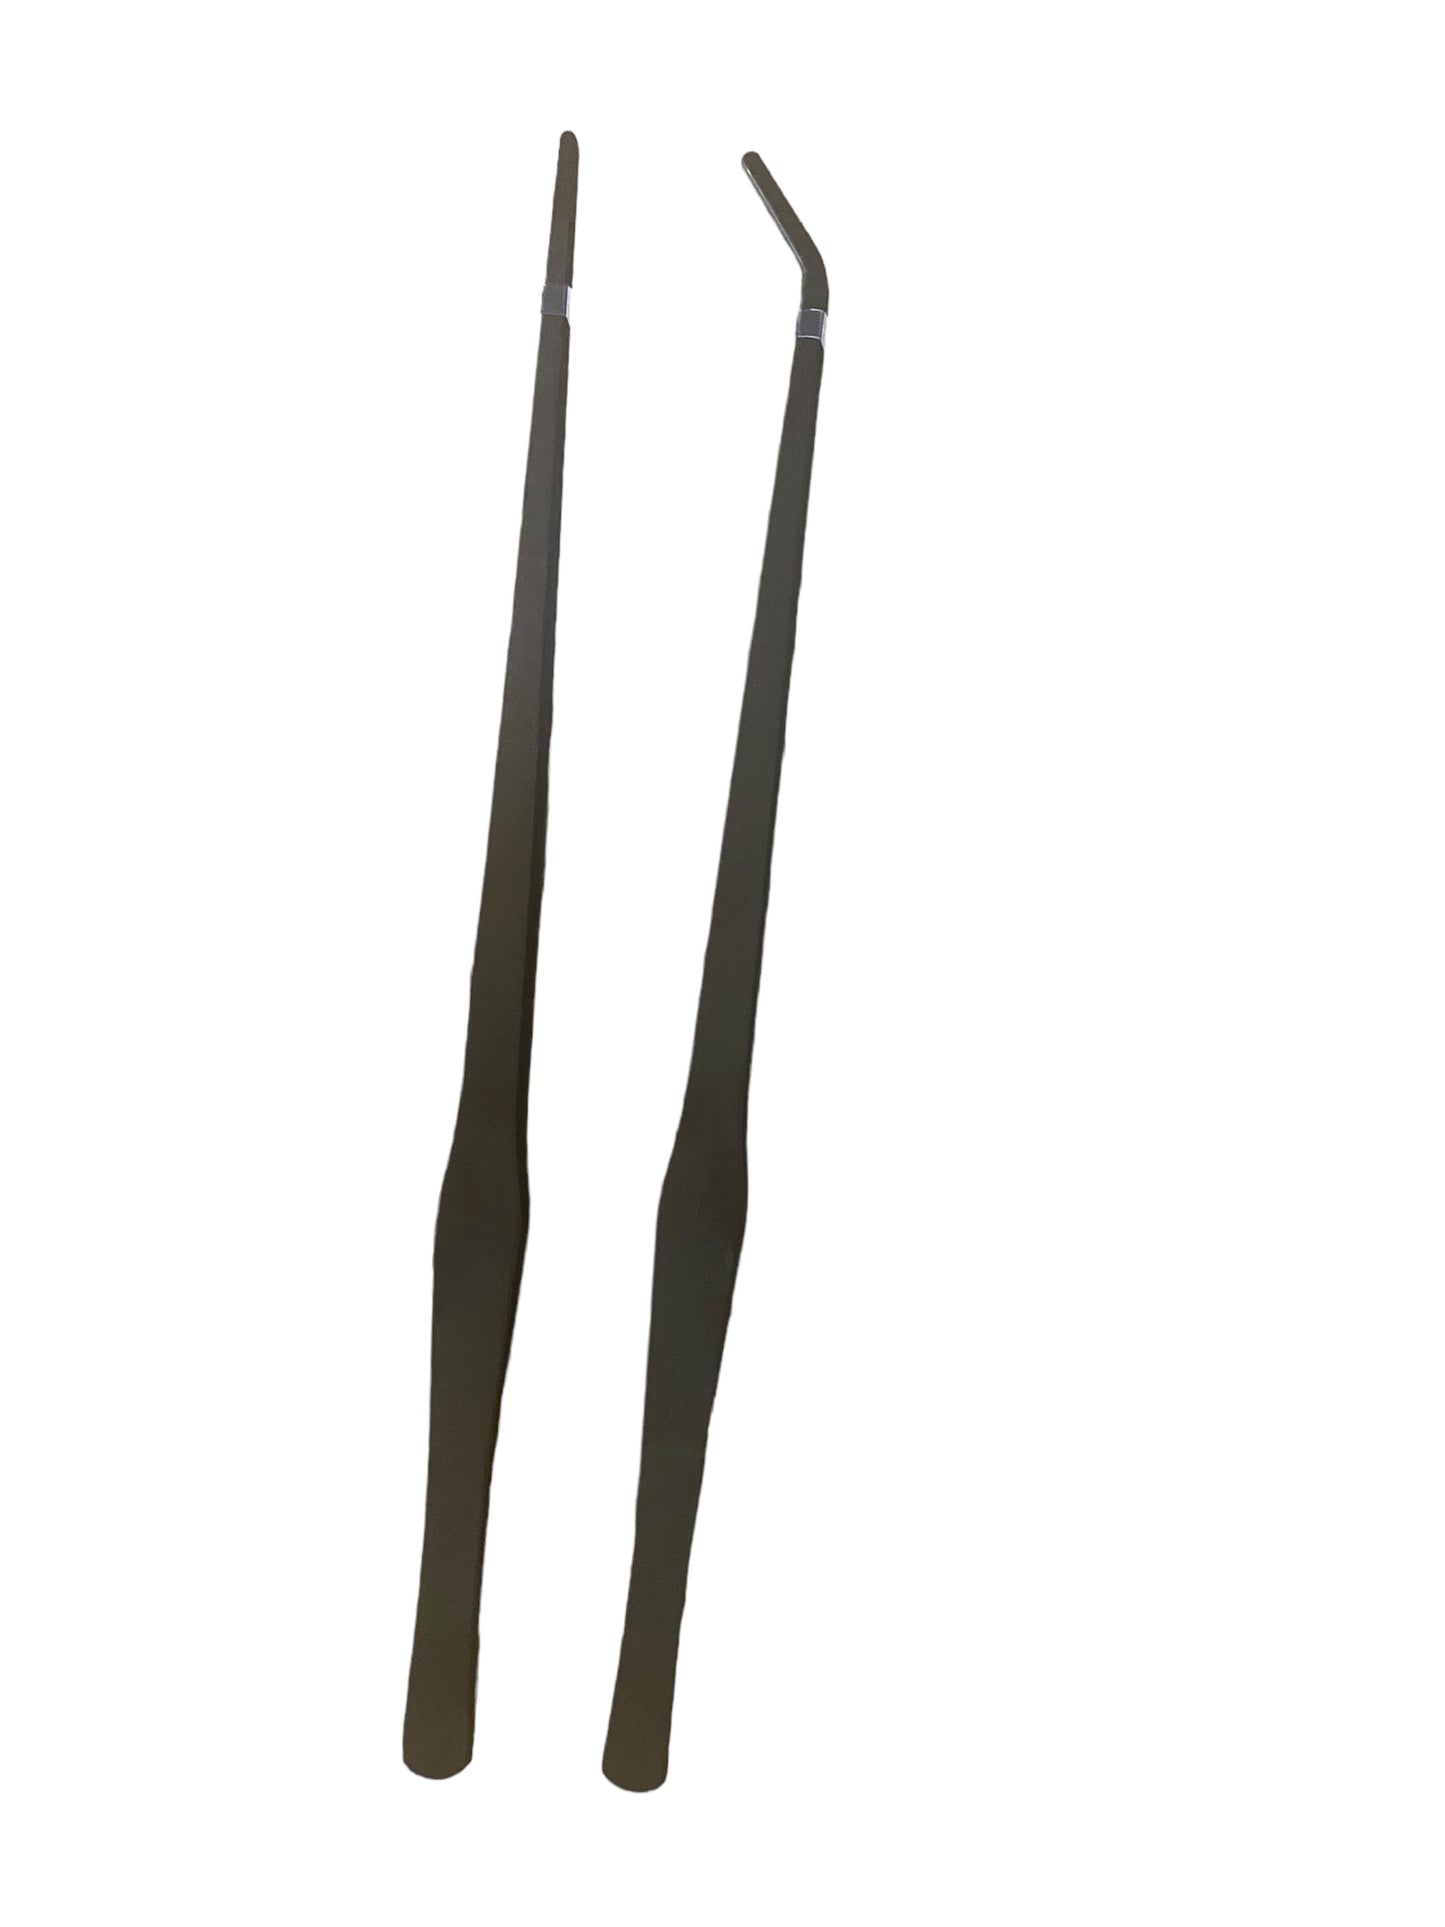 Terrarium tweezer combo - 38cm + 48cm bended & straight + scissors